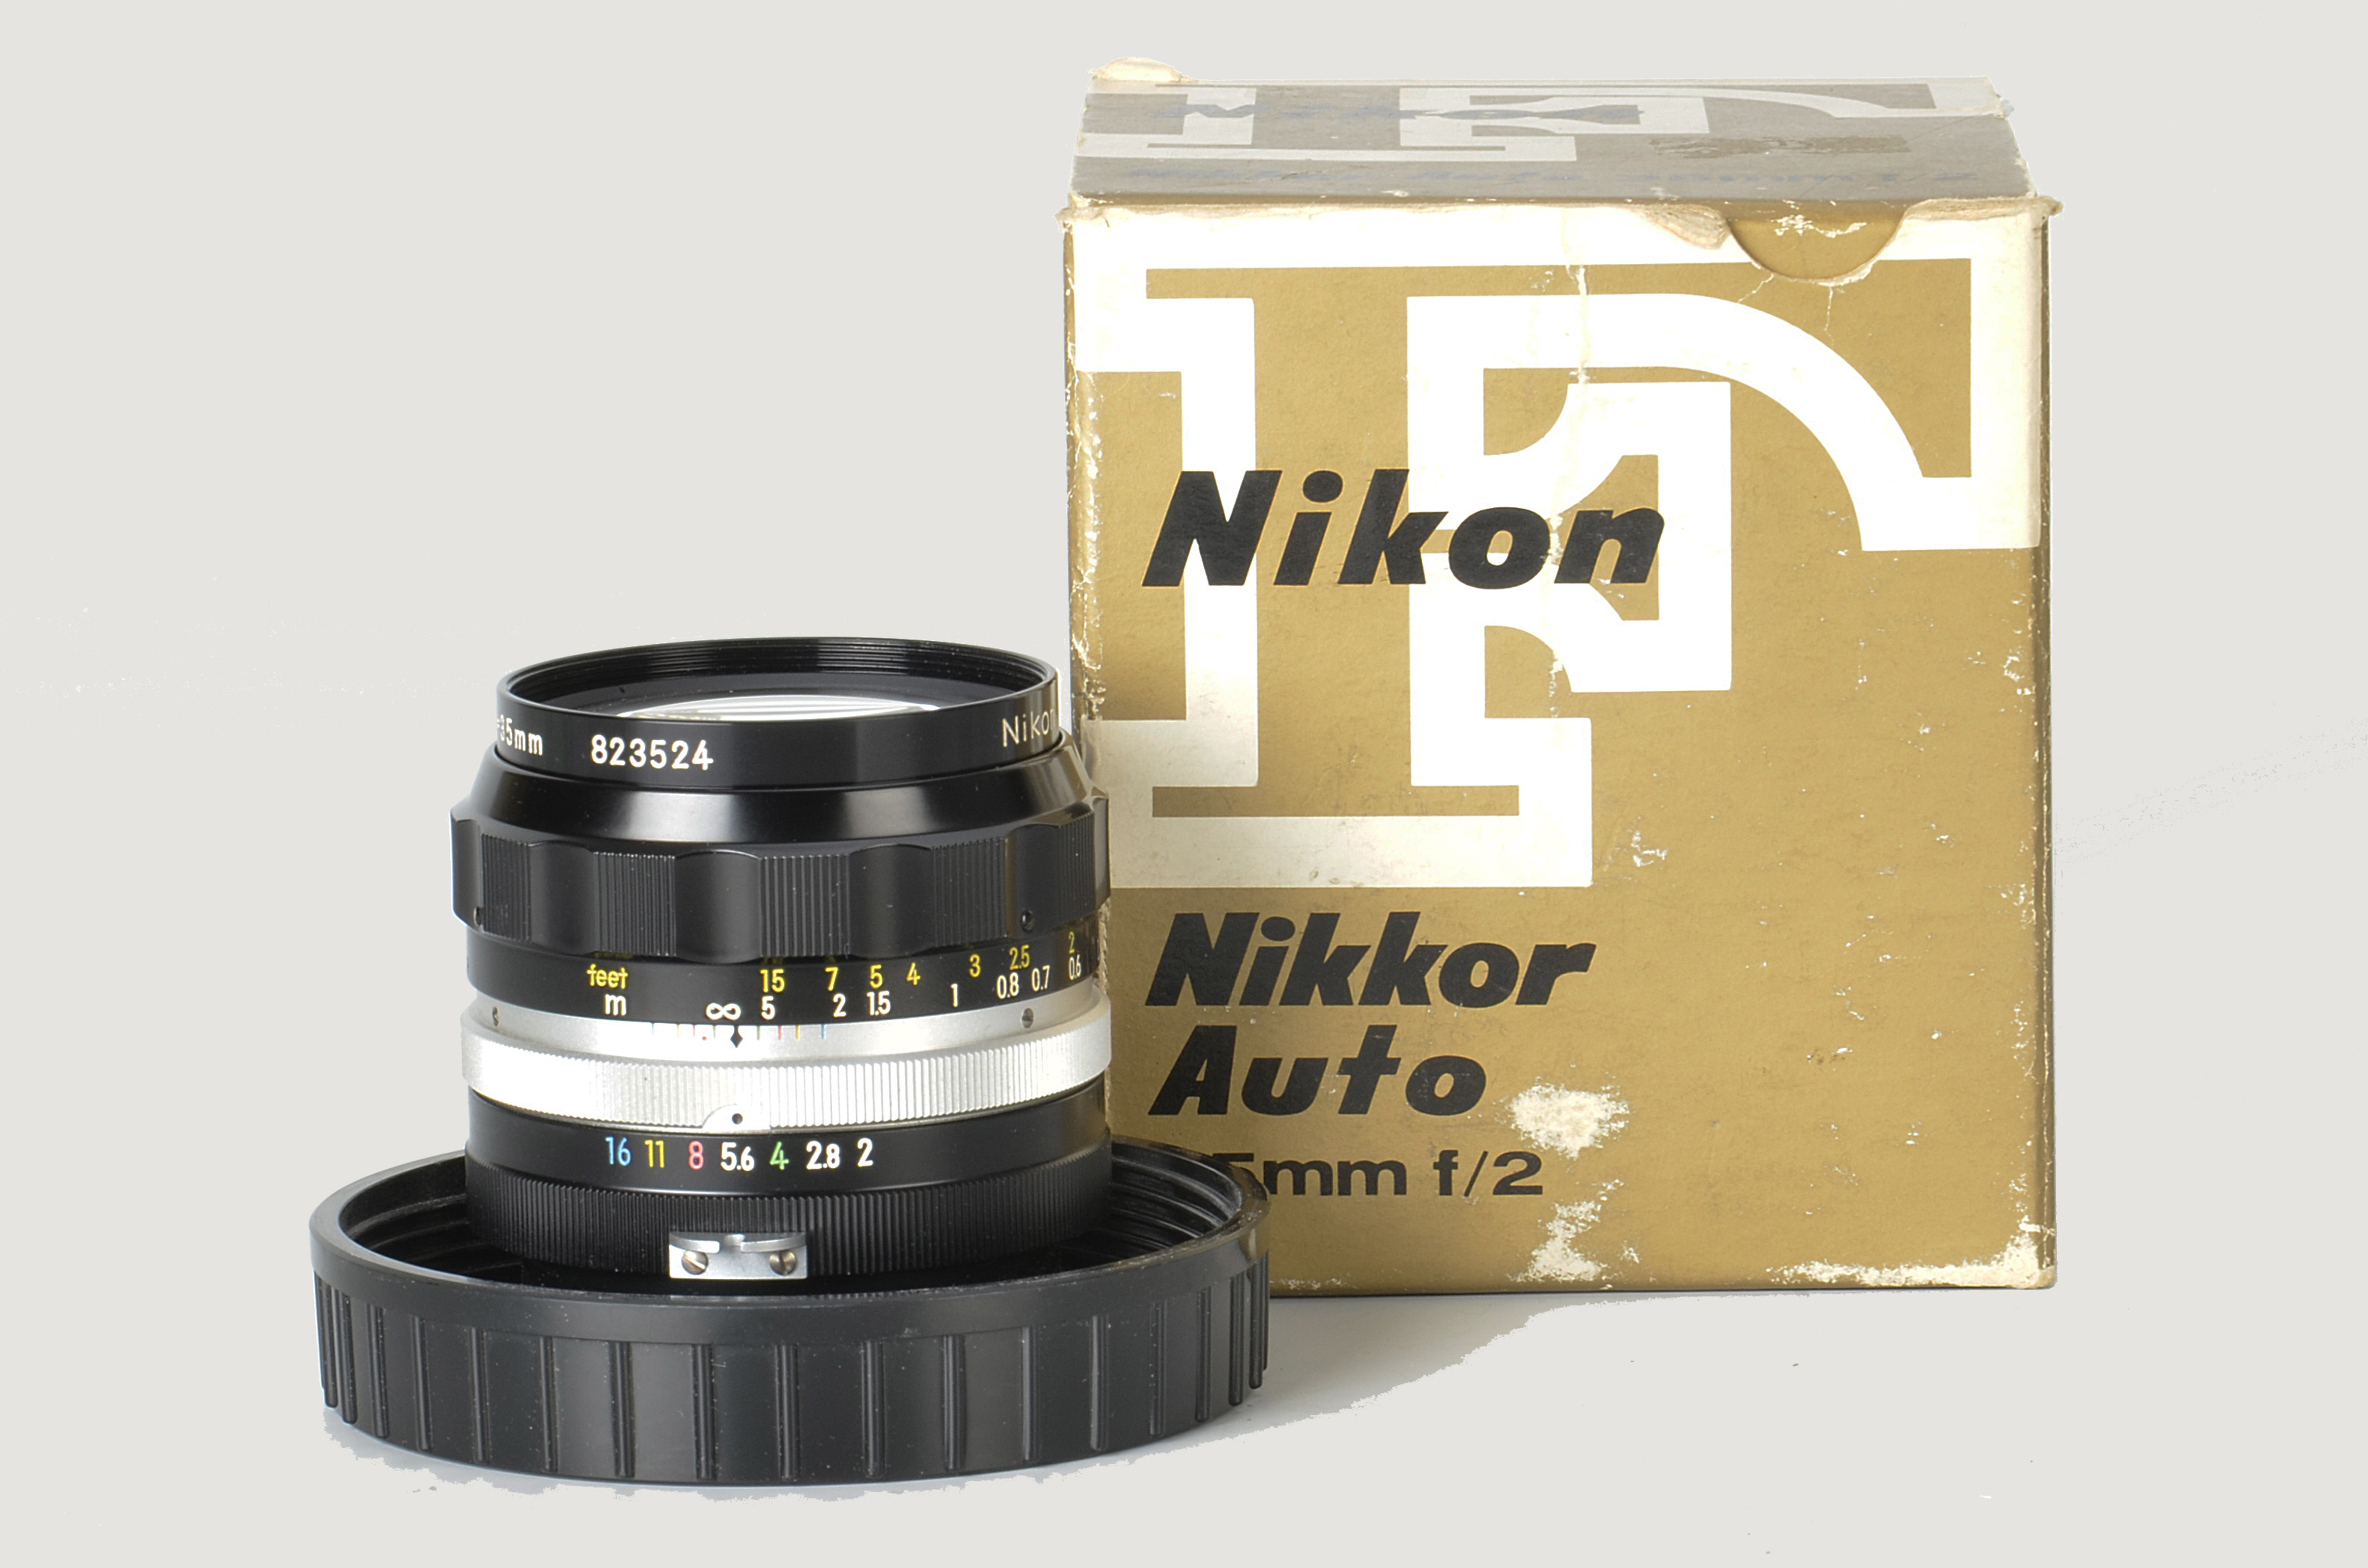 A Nikon Nikkor-O f/2 35mm Lens, black, serial no. 823524, body, E, elements, VG-E, in maker’s bubble